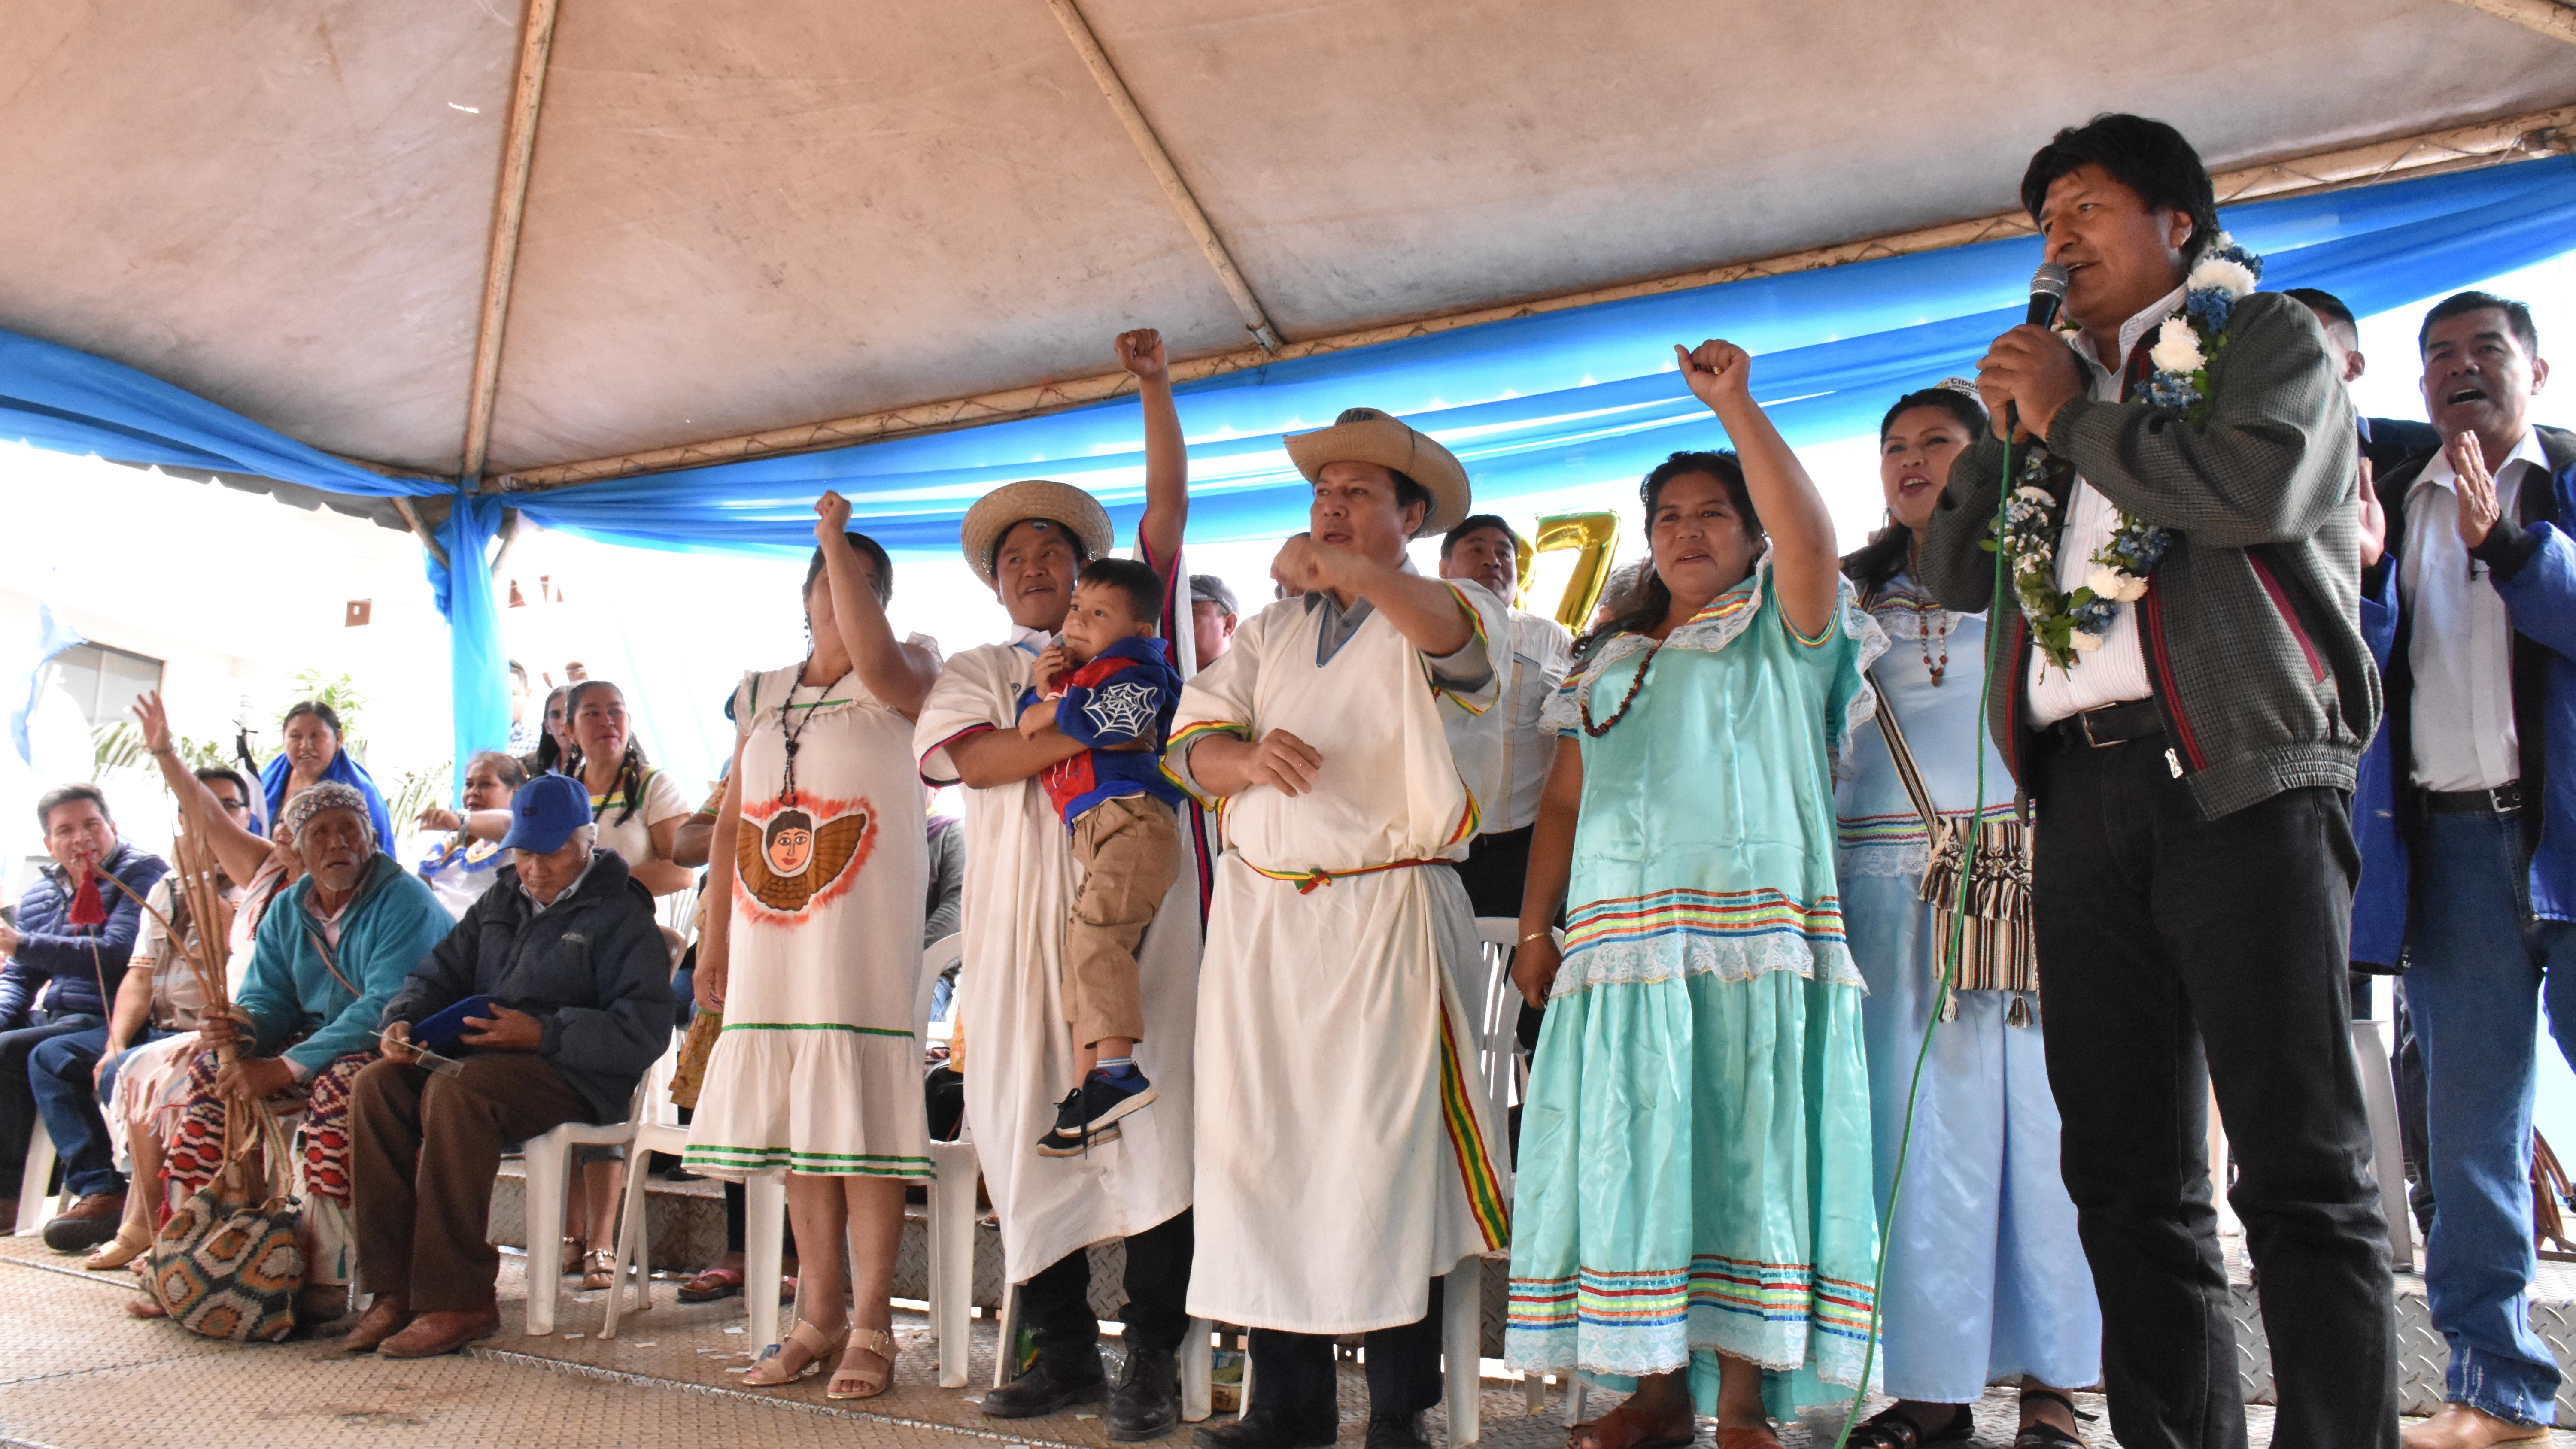 Evo Morales with Indigenous supporters in Santa Cruz